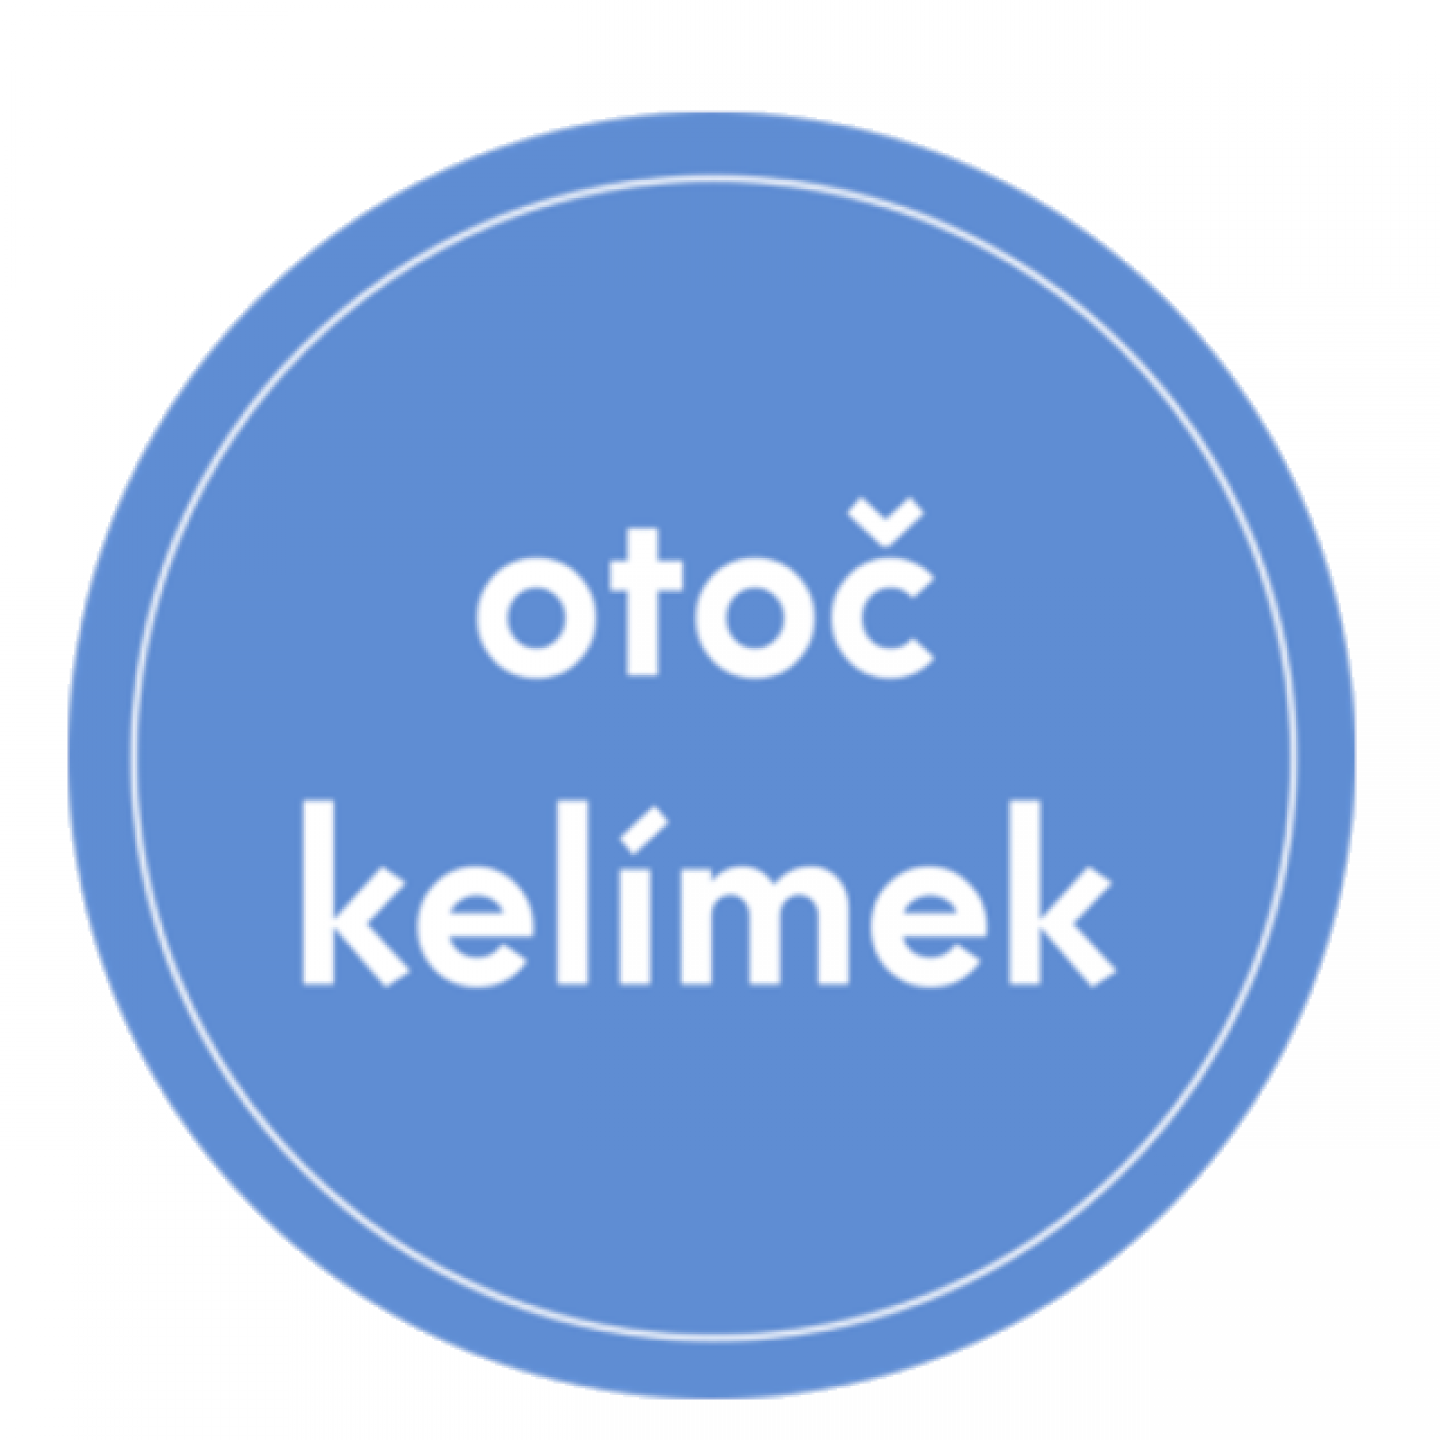 Otoc_kelimek-640x640